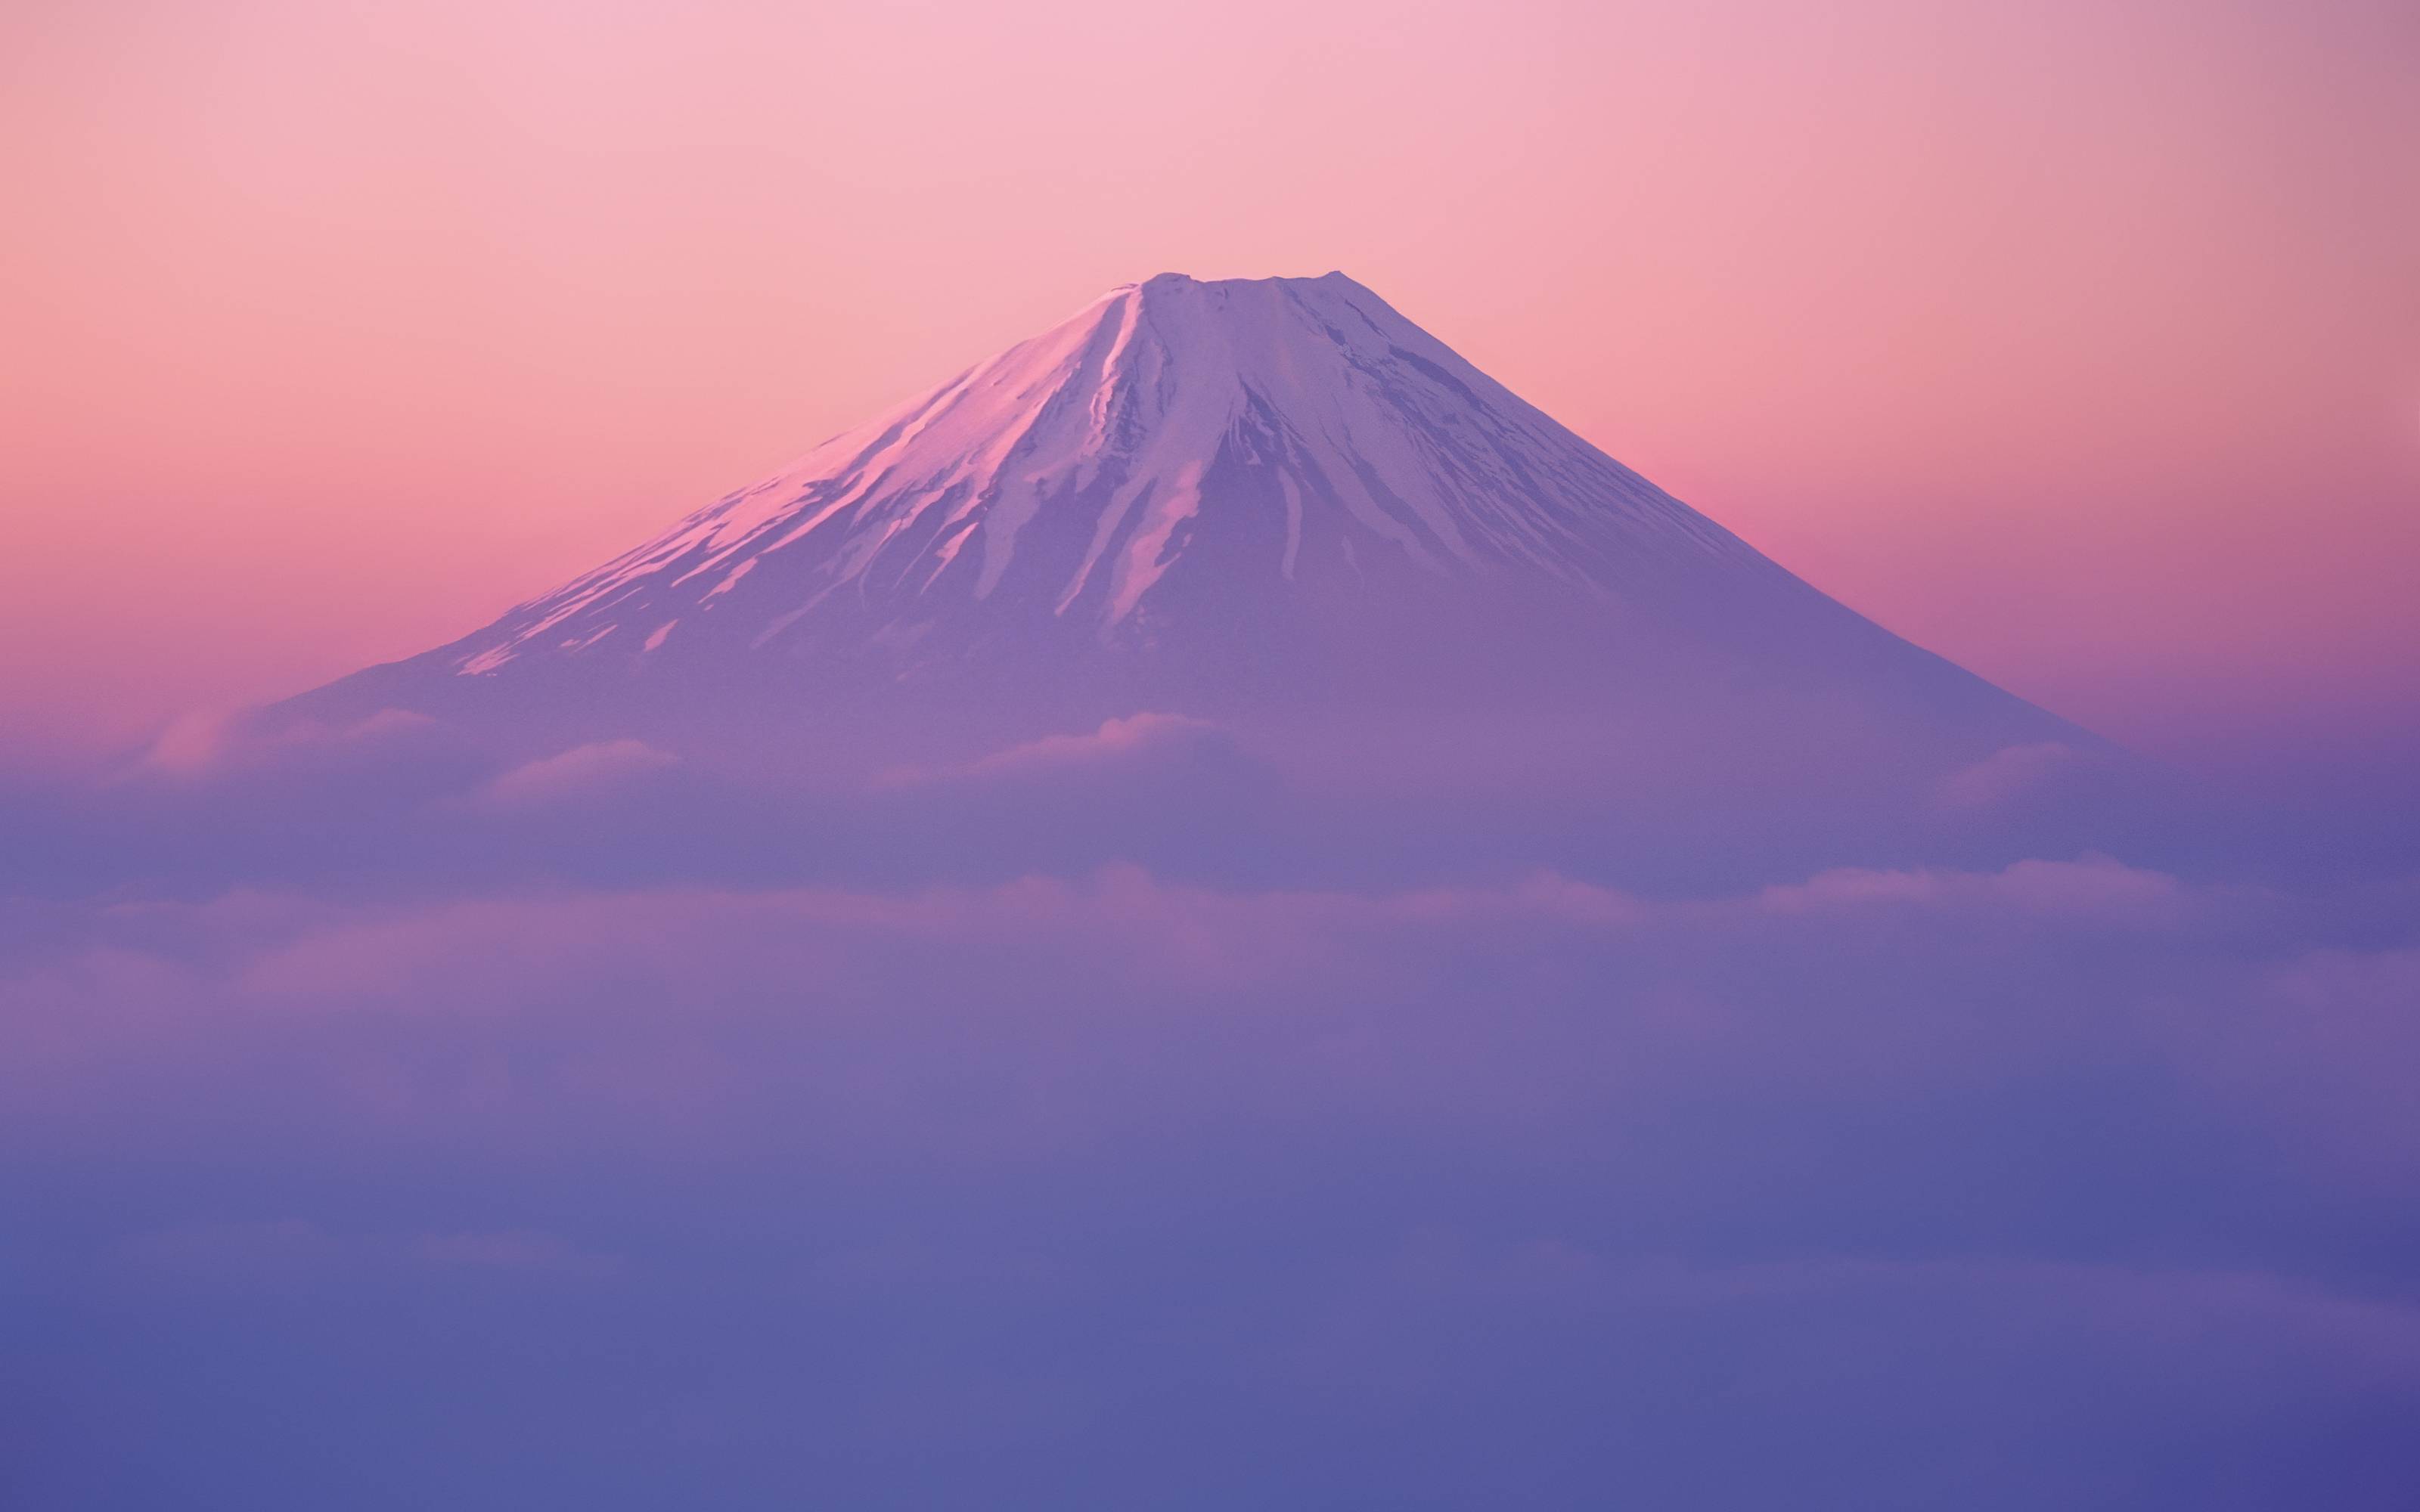 Wallpaper do Monte Fuji no Mac OS X Lion